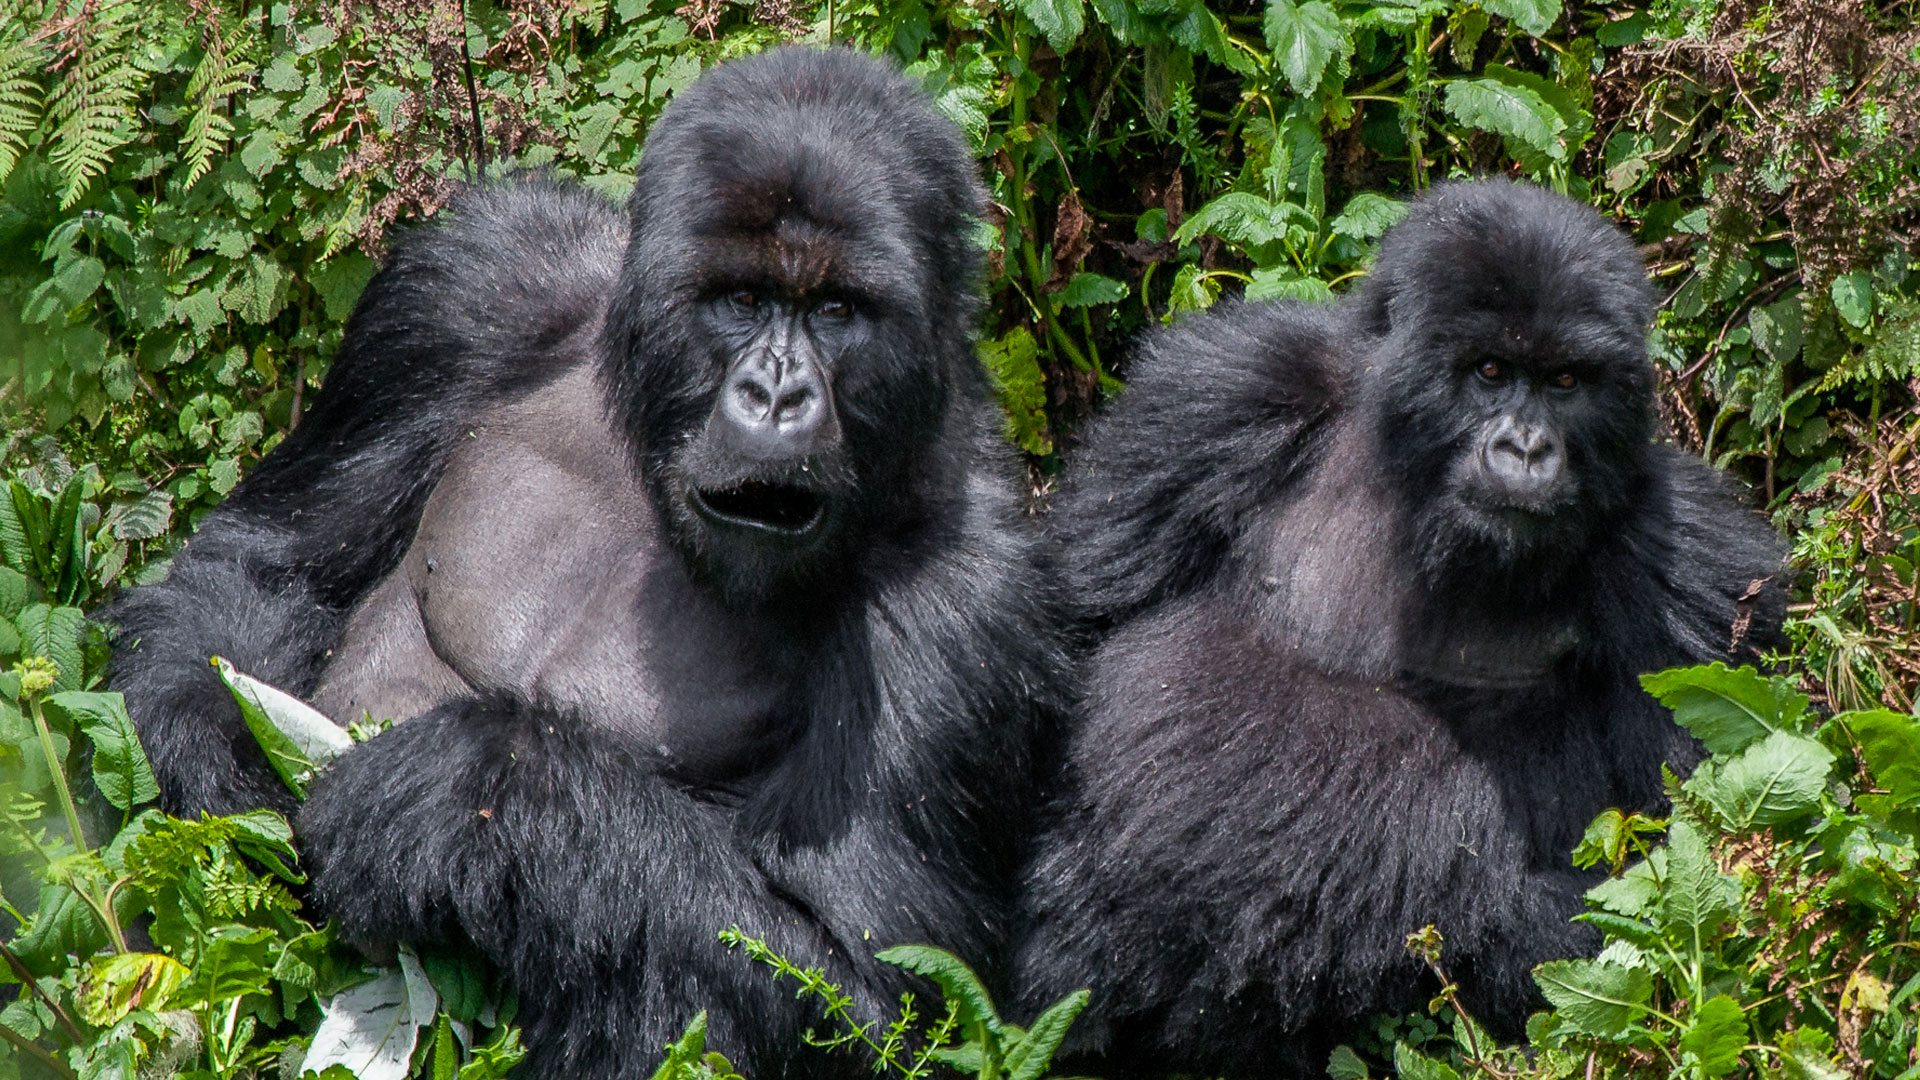 Planning a Gorilla Safari to Uganda - What to Consider